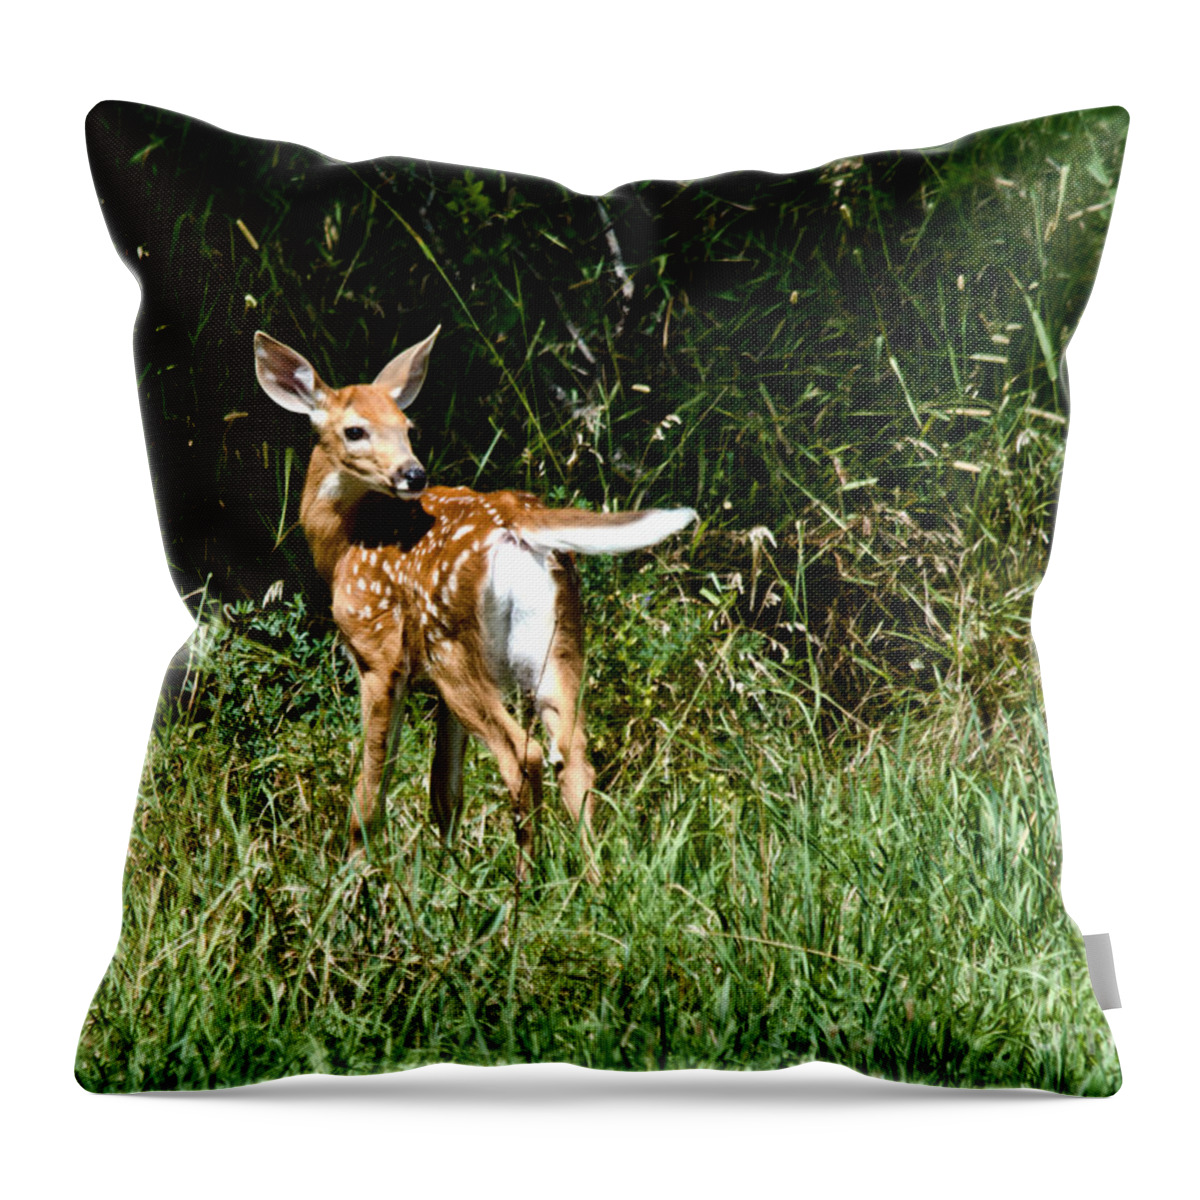 Deer Throw Pillow featuring the photograph Sweet Young Deer by Cheryl Baxter